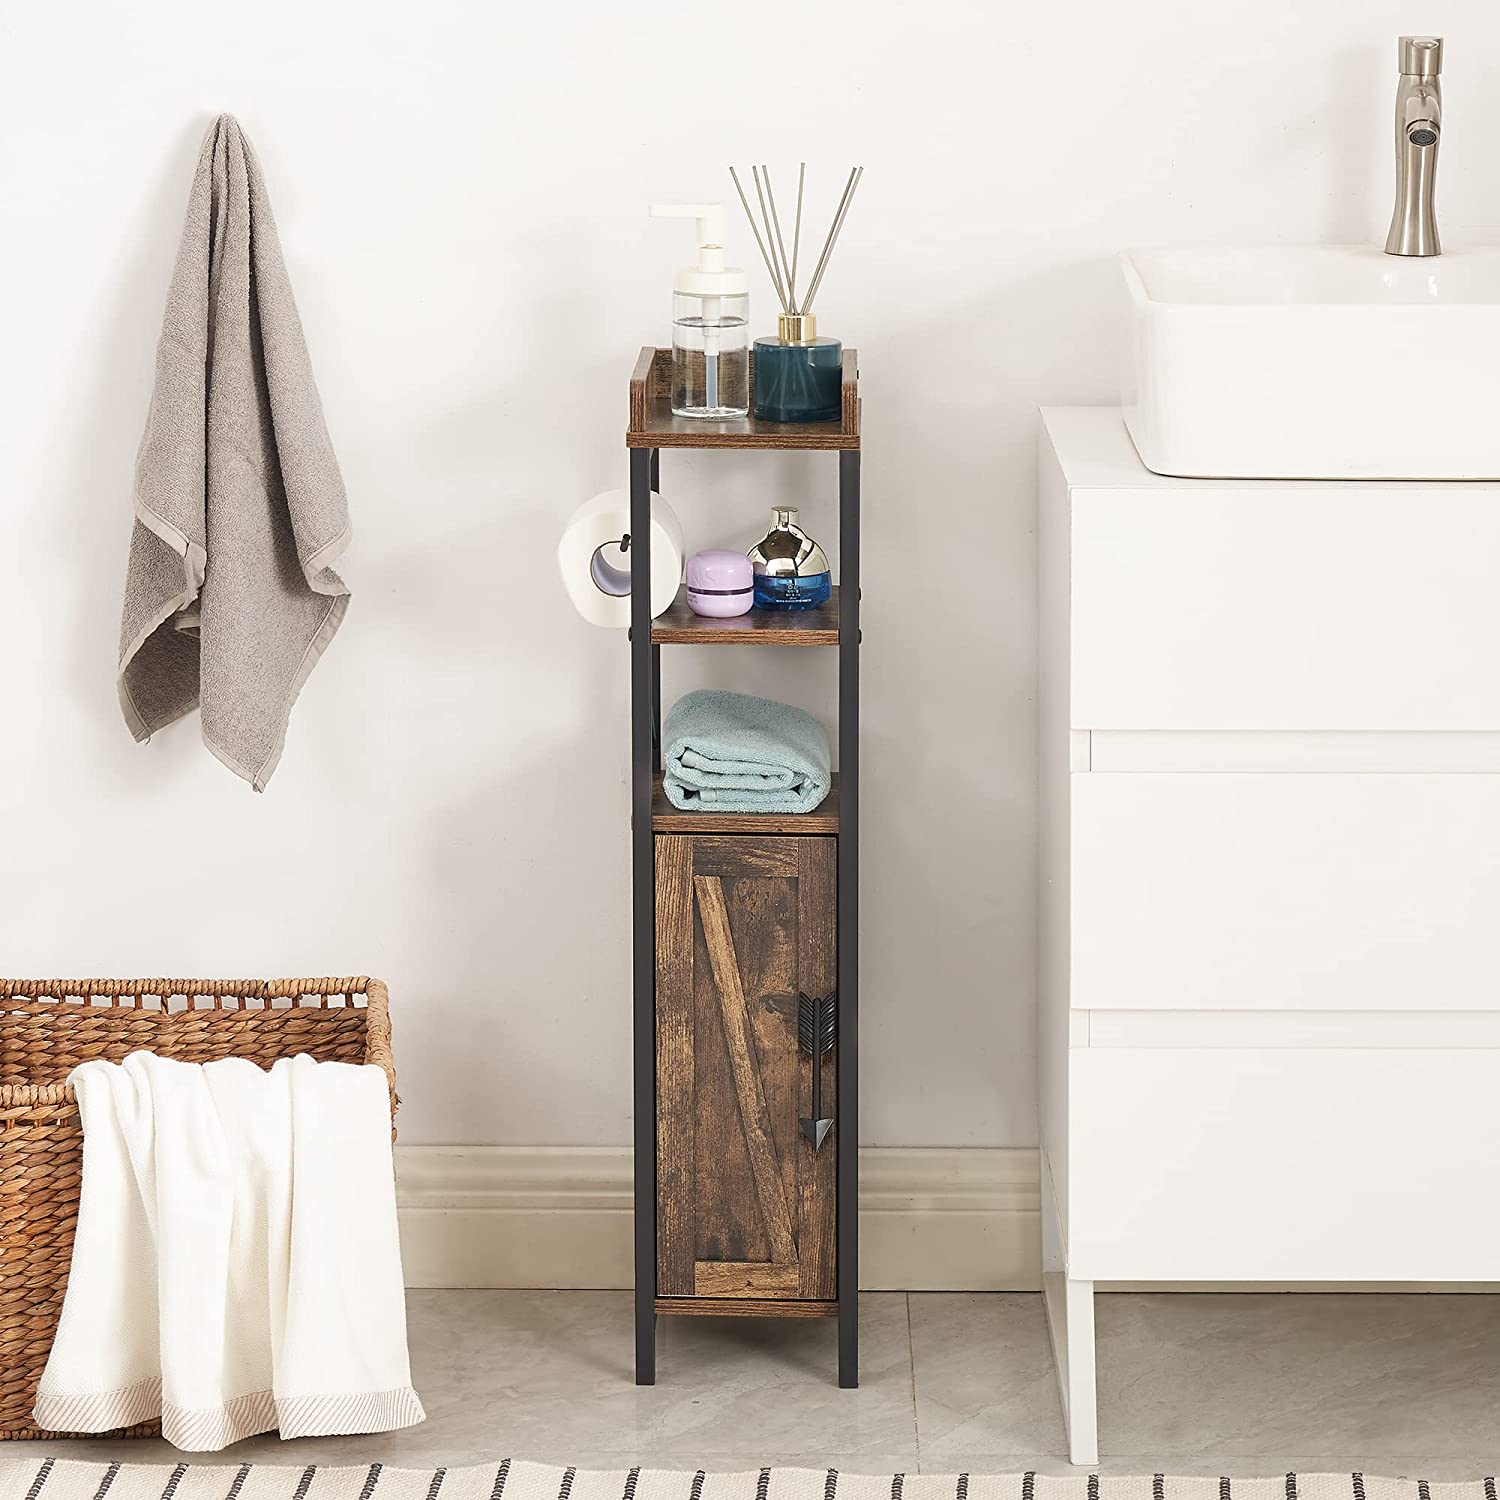 VECELO Small Bathroom Cabinet, Slim Toilet Paper Holder with Door & 2 Shelves, Upgraded Storage Organizer